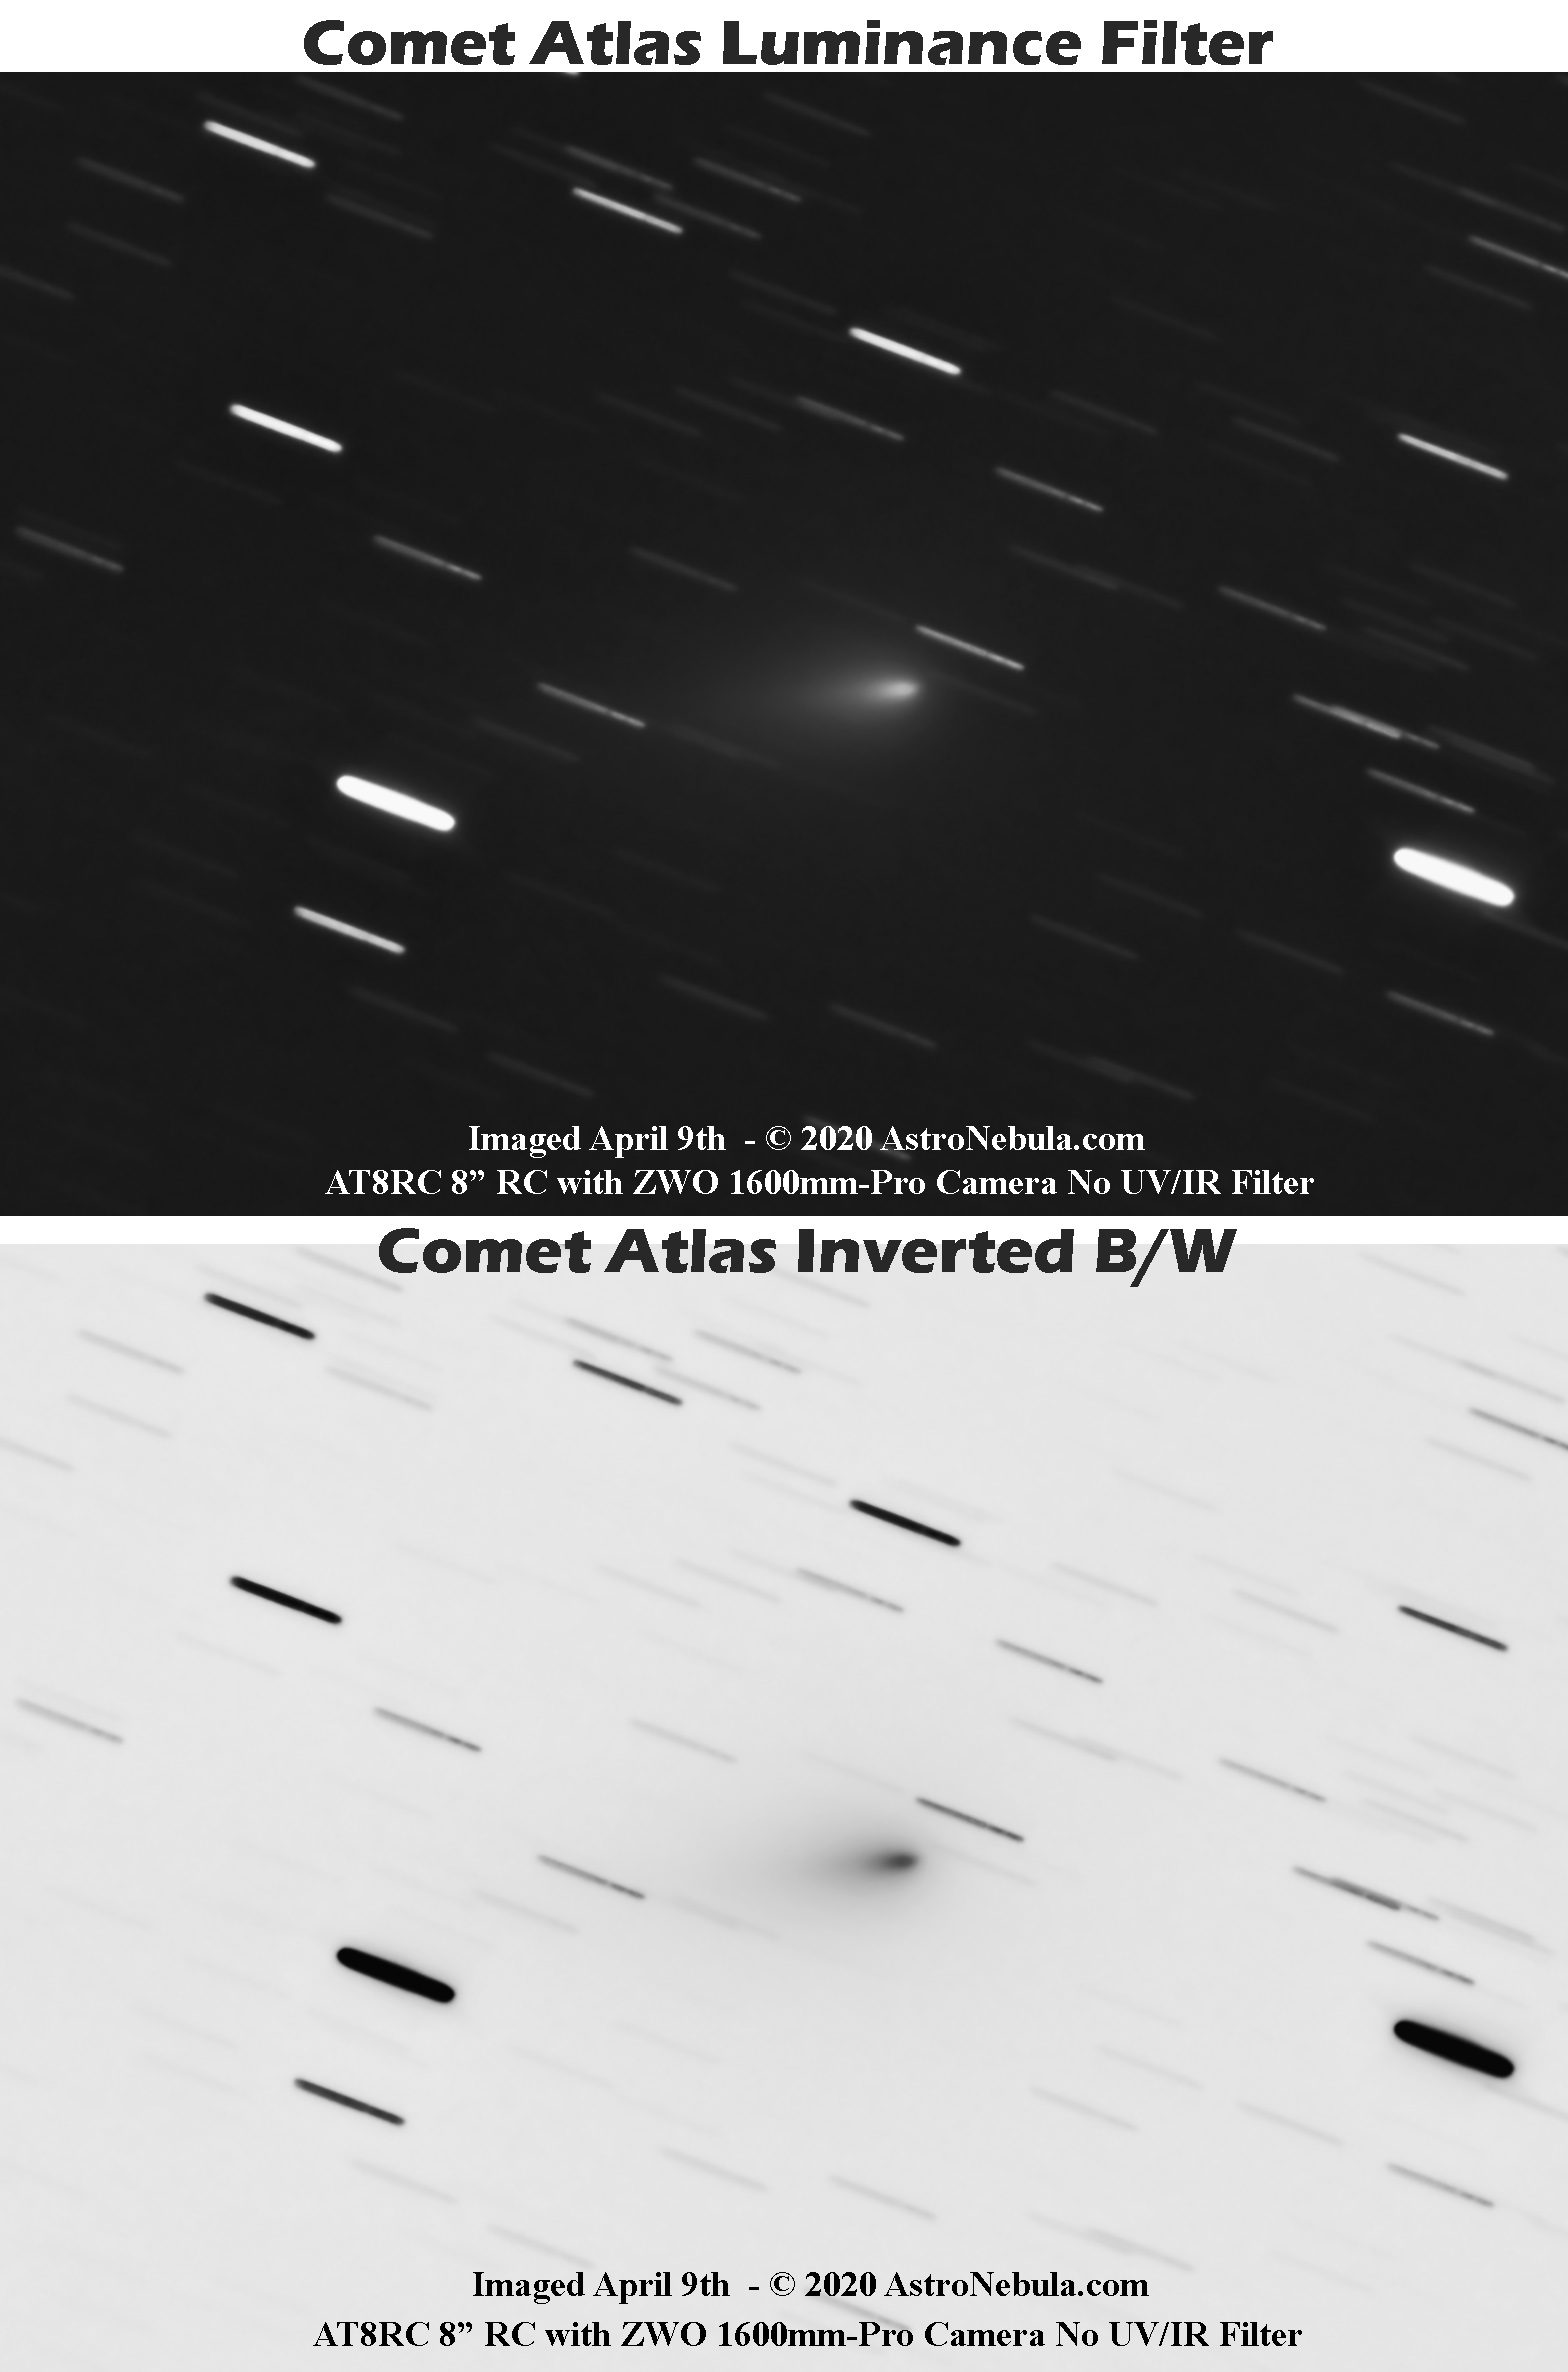 Comet Atlas imaged April 9th No UV/IR filter